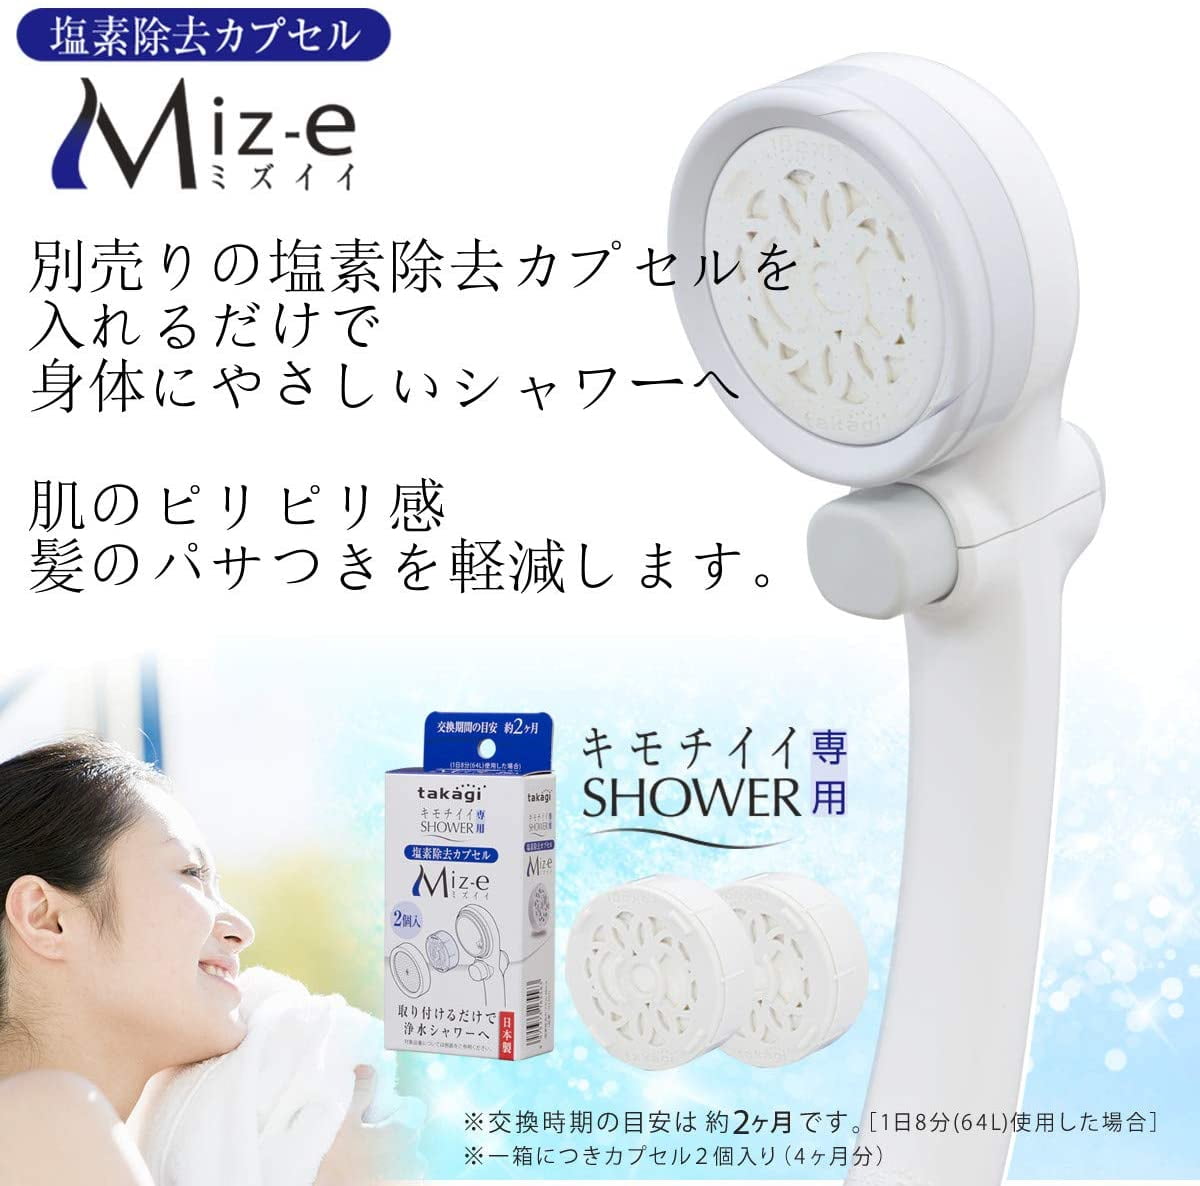 Takagi Shower Head Water-saving Low water pressure JSB012 